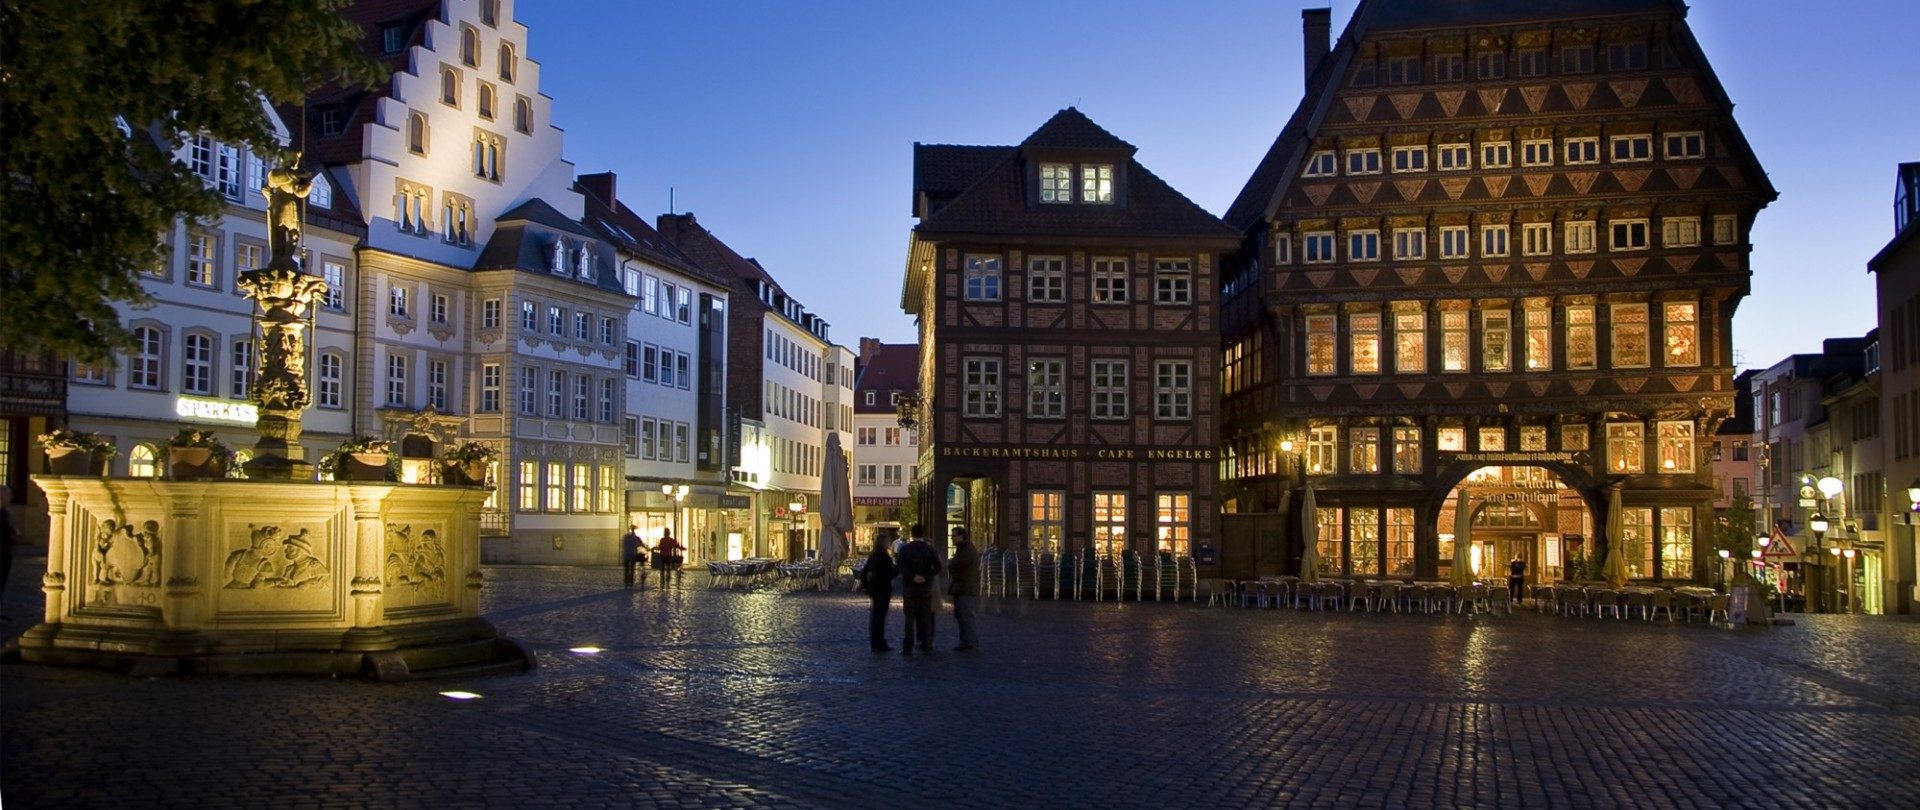 Hildesheim dating